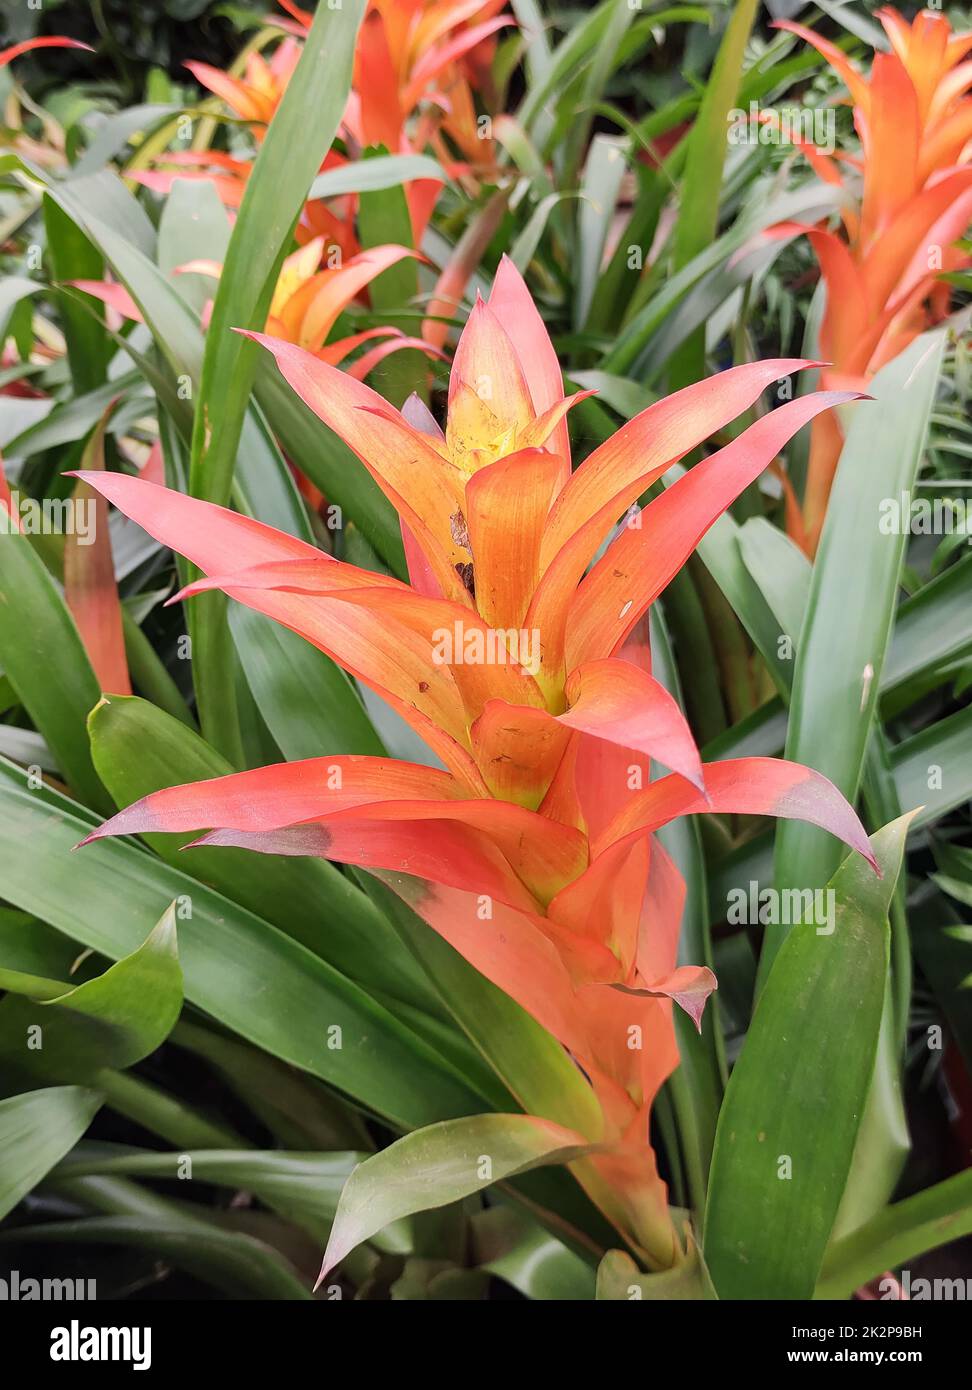 Orange red Guzmania tropical plants. Stock Photo